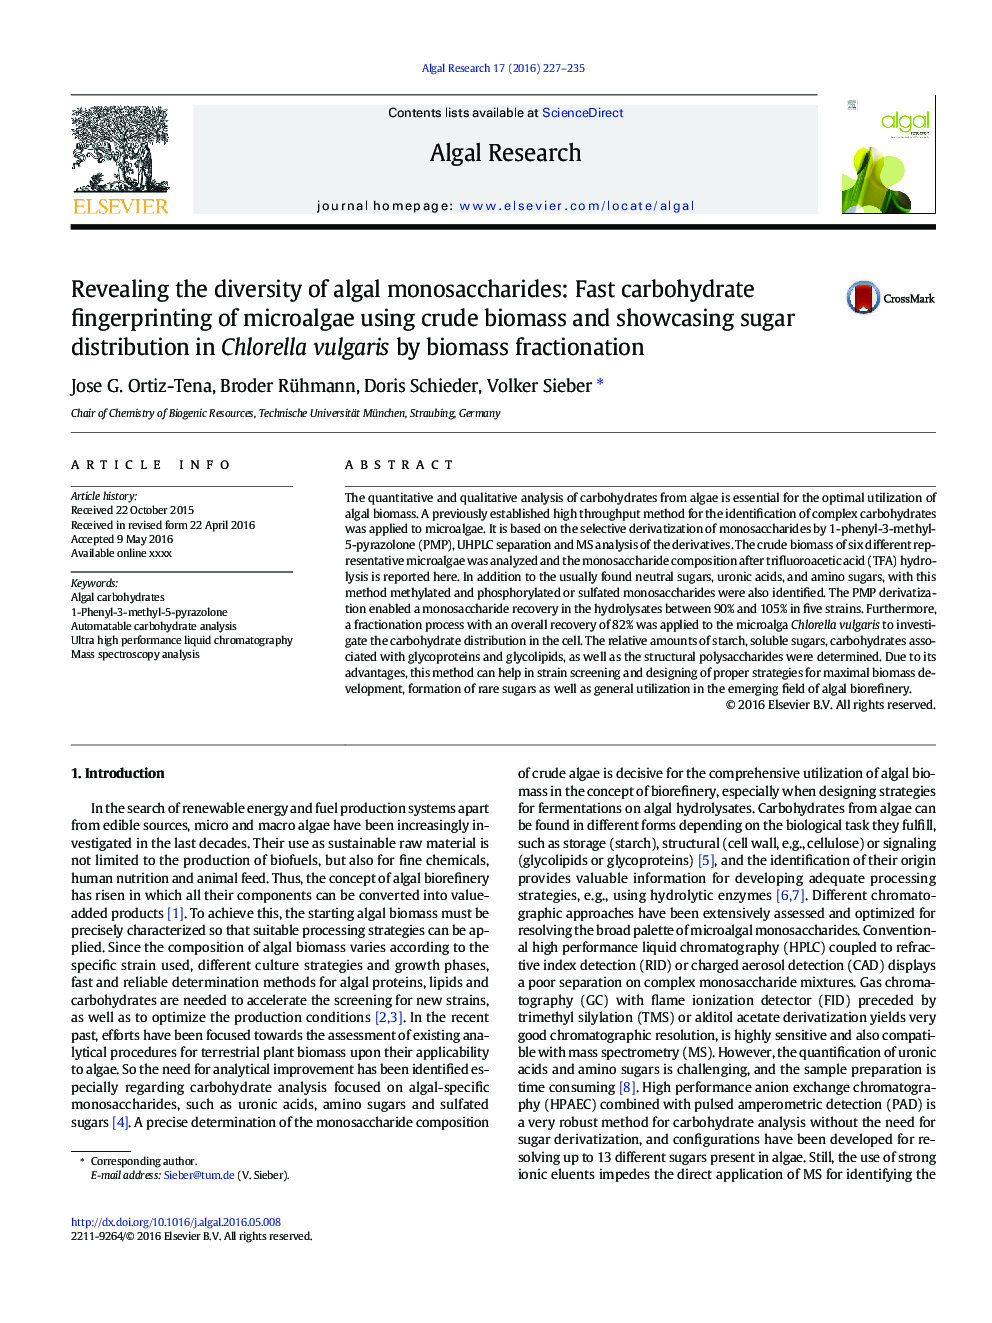 Revealing the diversity of algal monosaccharides: Fast carbohydrate fingerprinting of microalgae using crude biomass and showcasing sugar distribution in Chlorella vulgaris by biomass fractionation